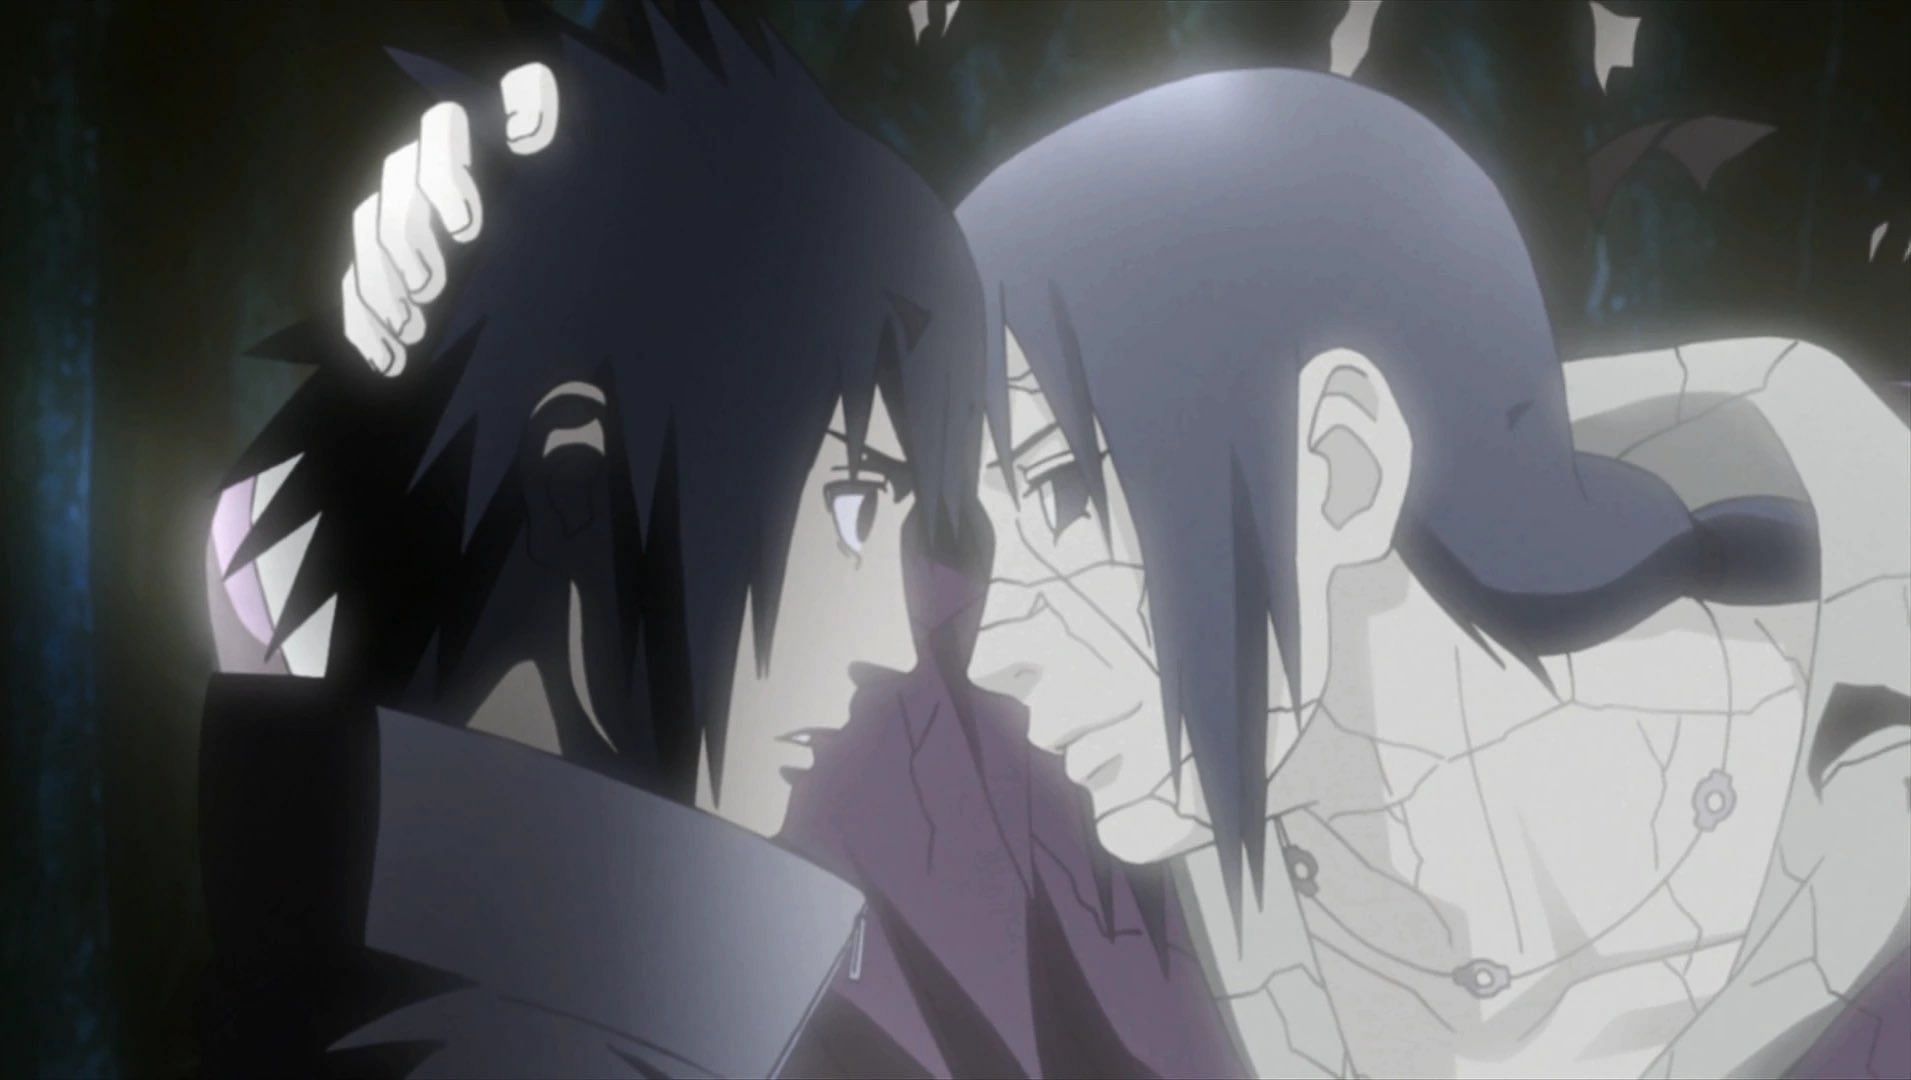 Itachi and Sasuke at the end (Image via Studio Pierrot)